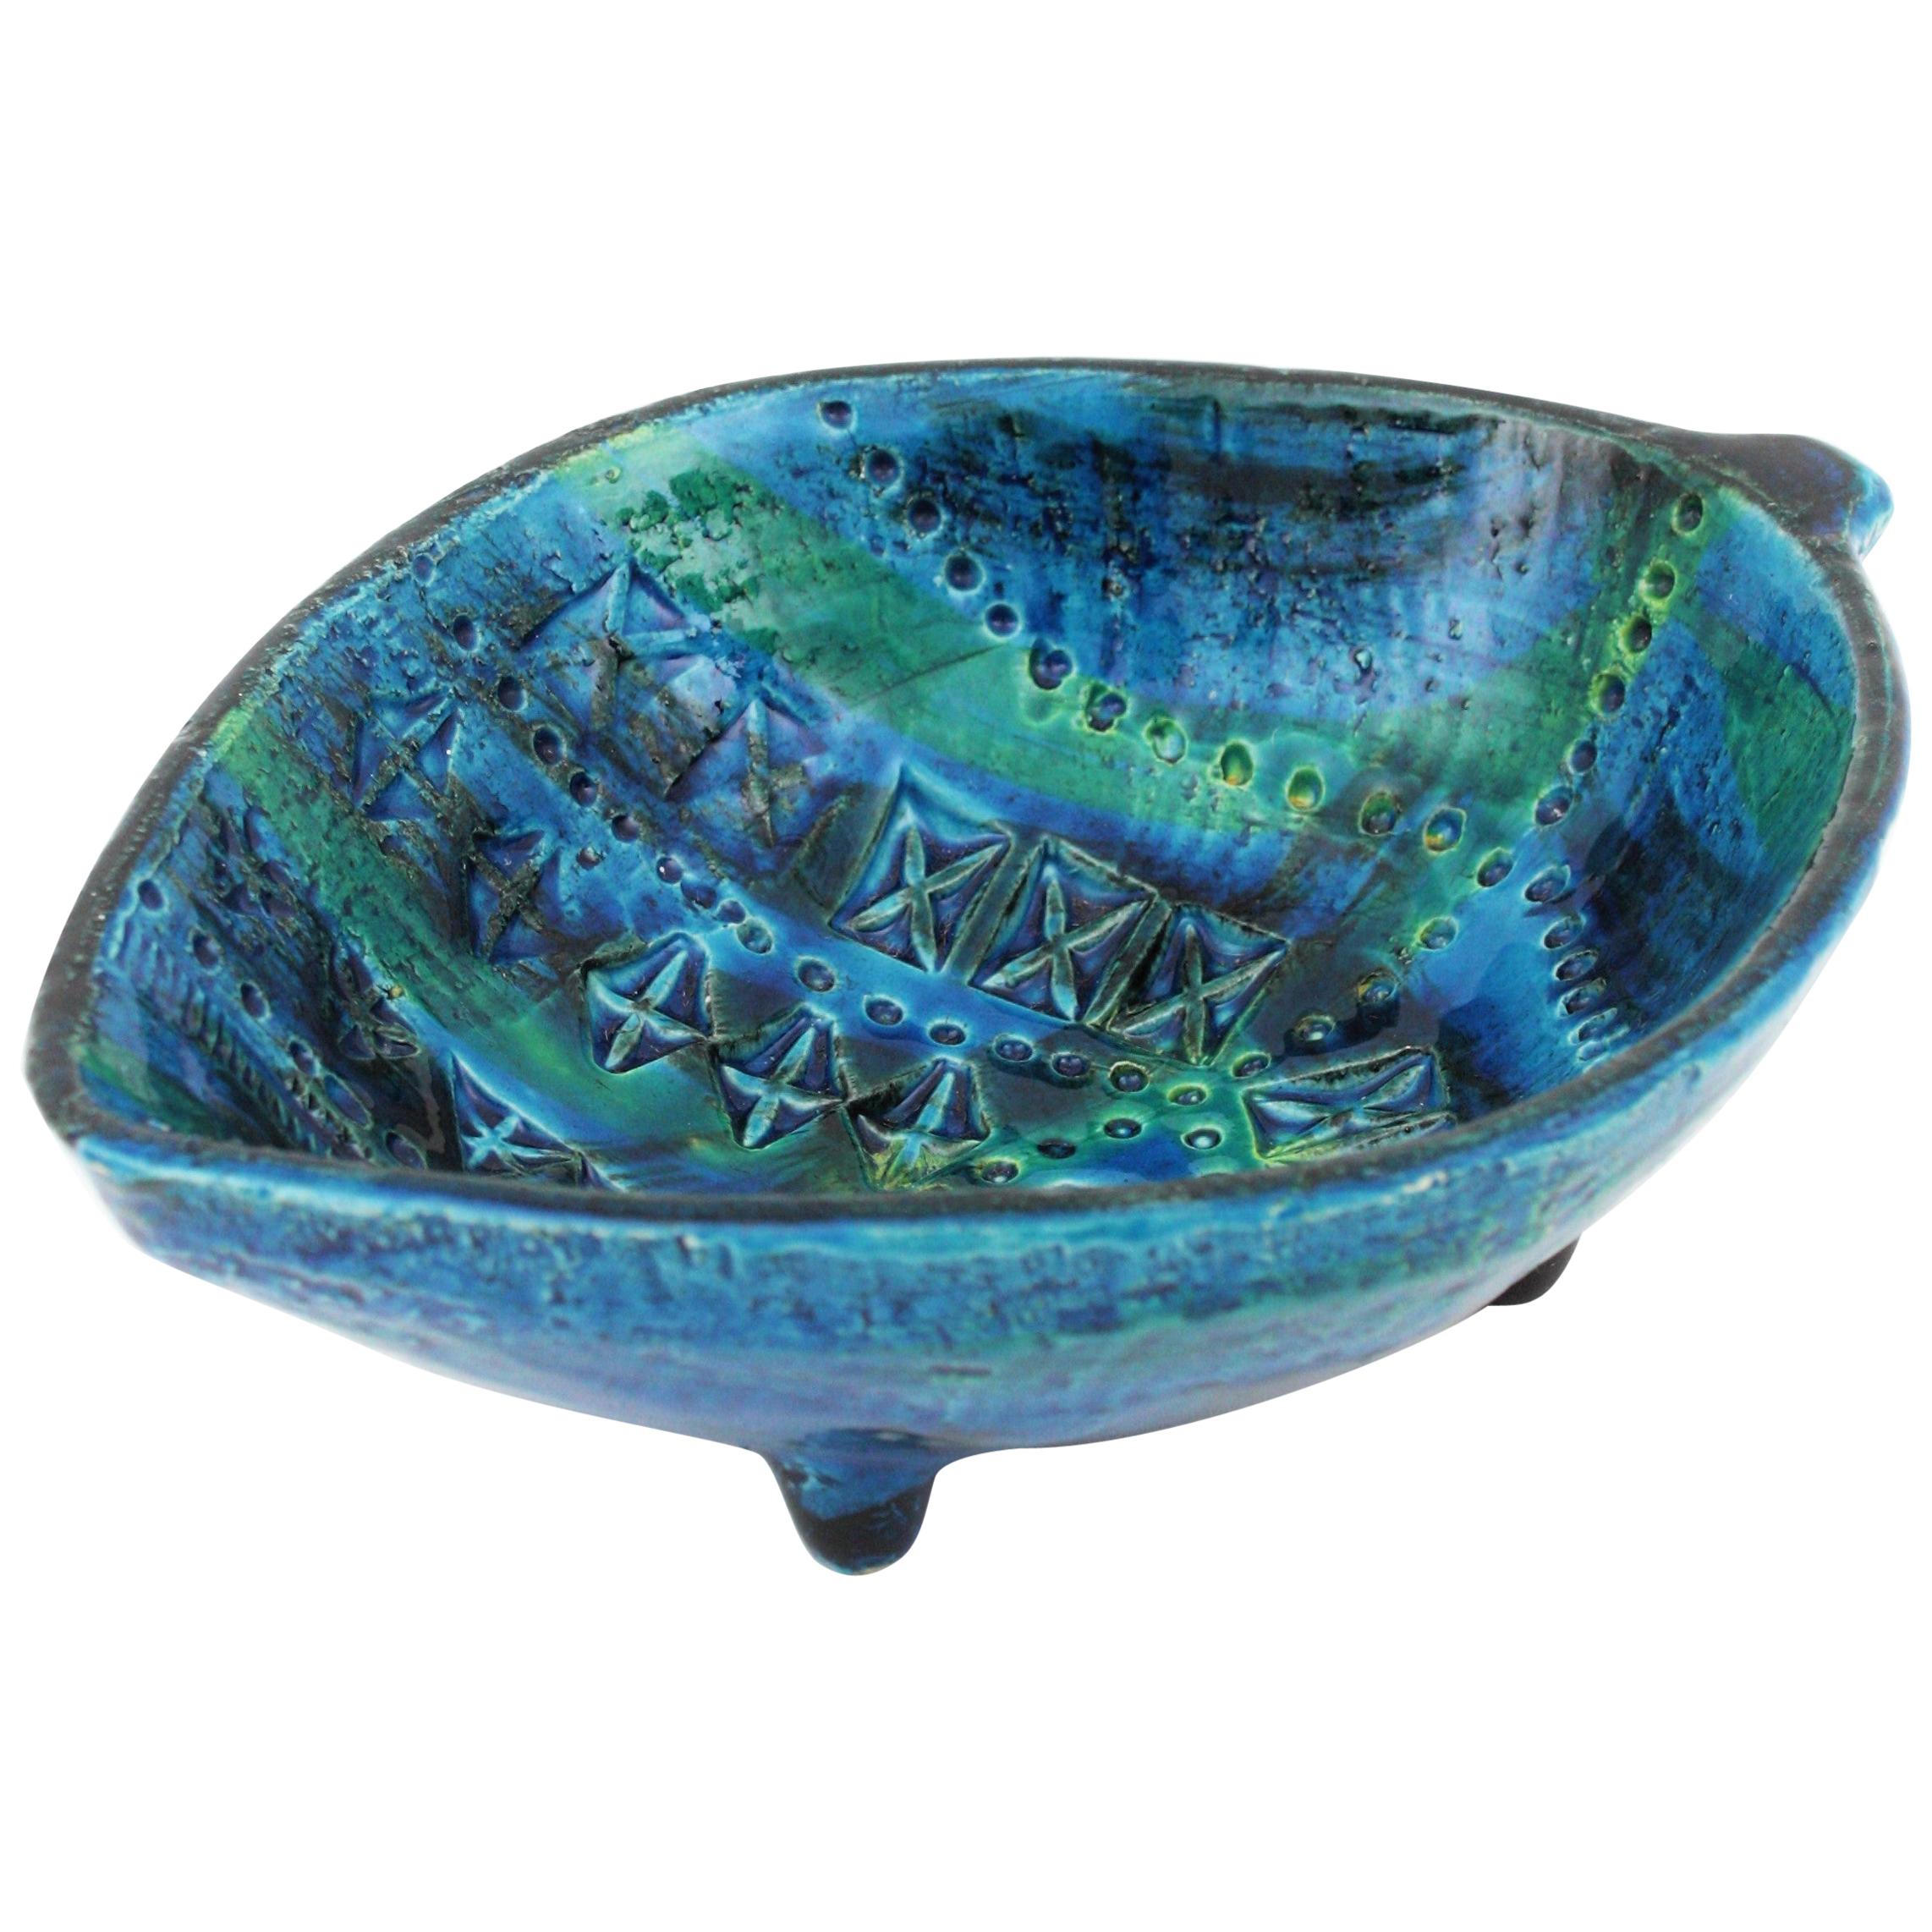 Aldo Londi for Bitossi Rimini Blu Leaf Shaped Glazed Ceramic Bowl / Ashtray For Sale